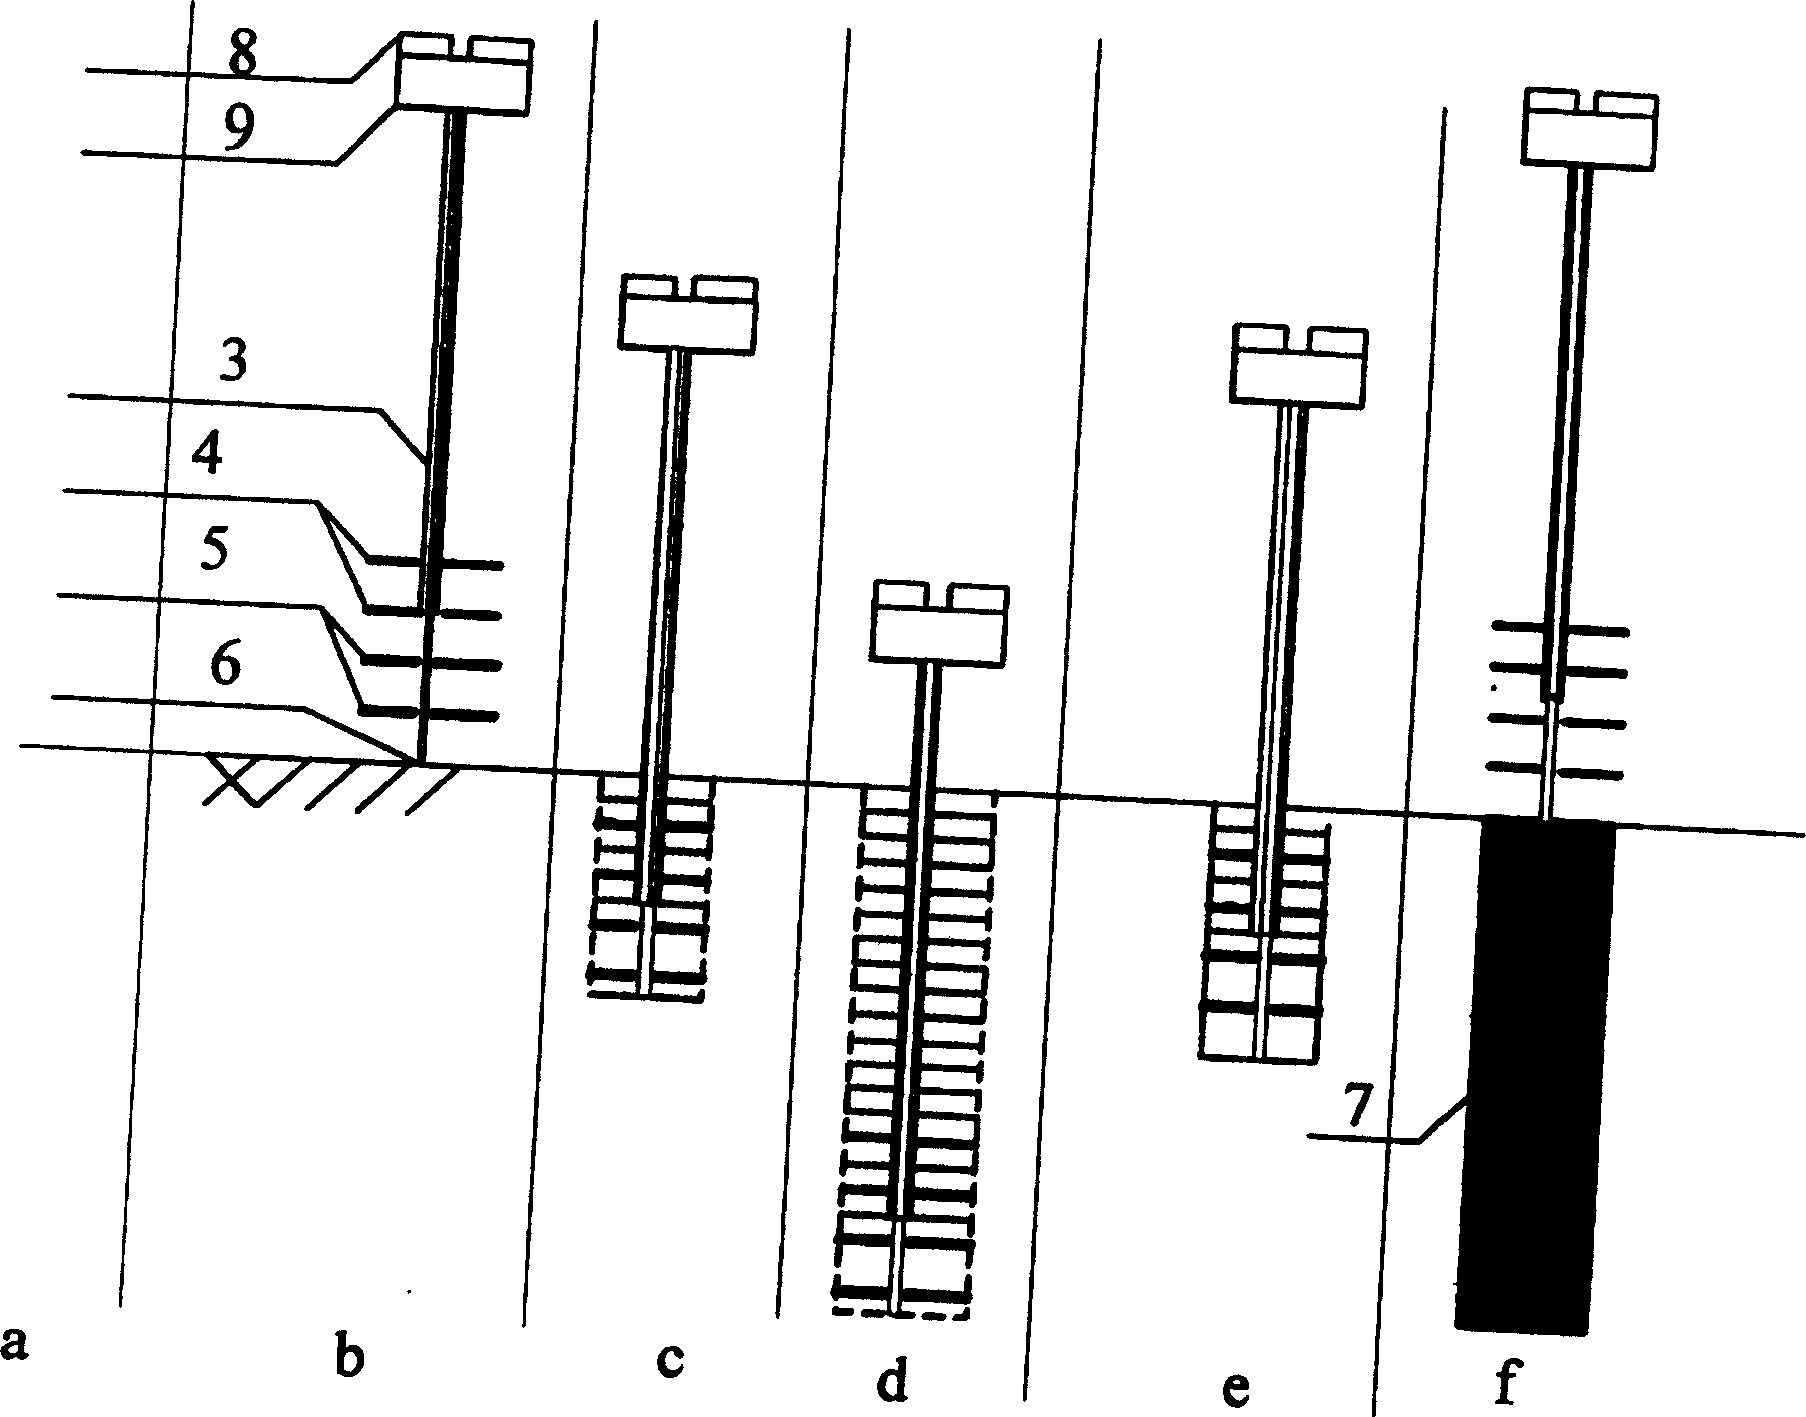 Pile forming operation method for bi-directional stirring piles